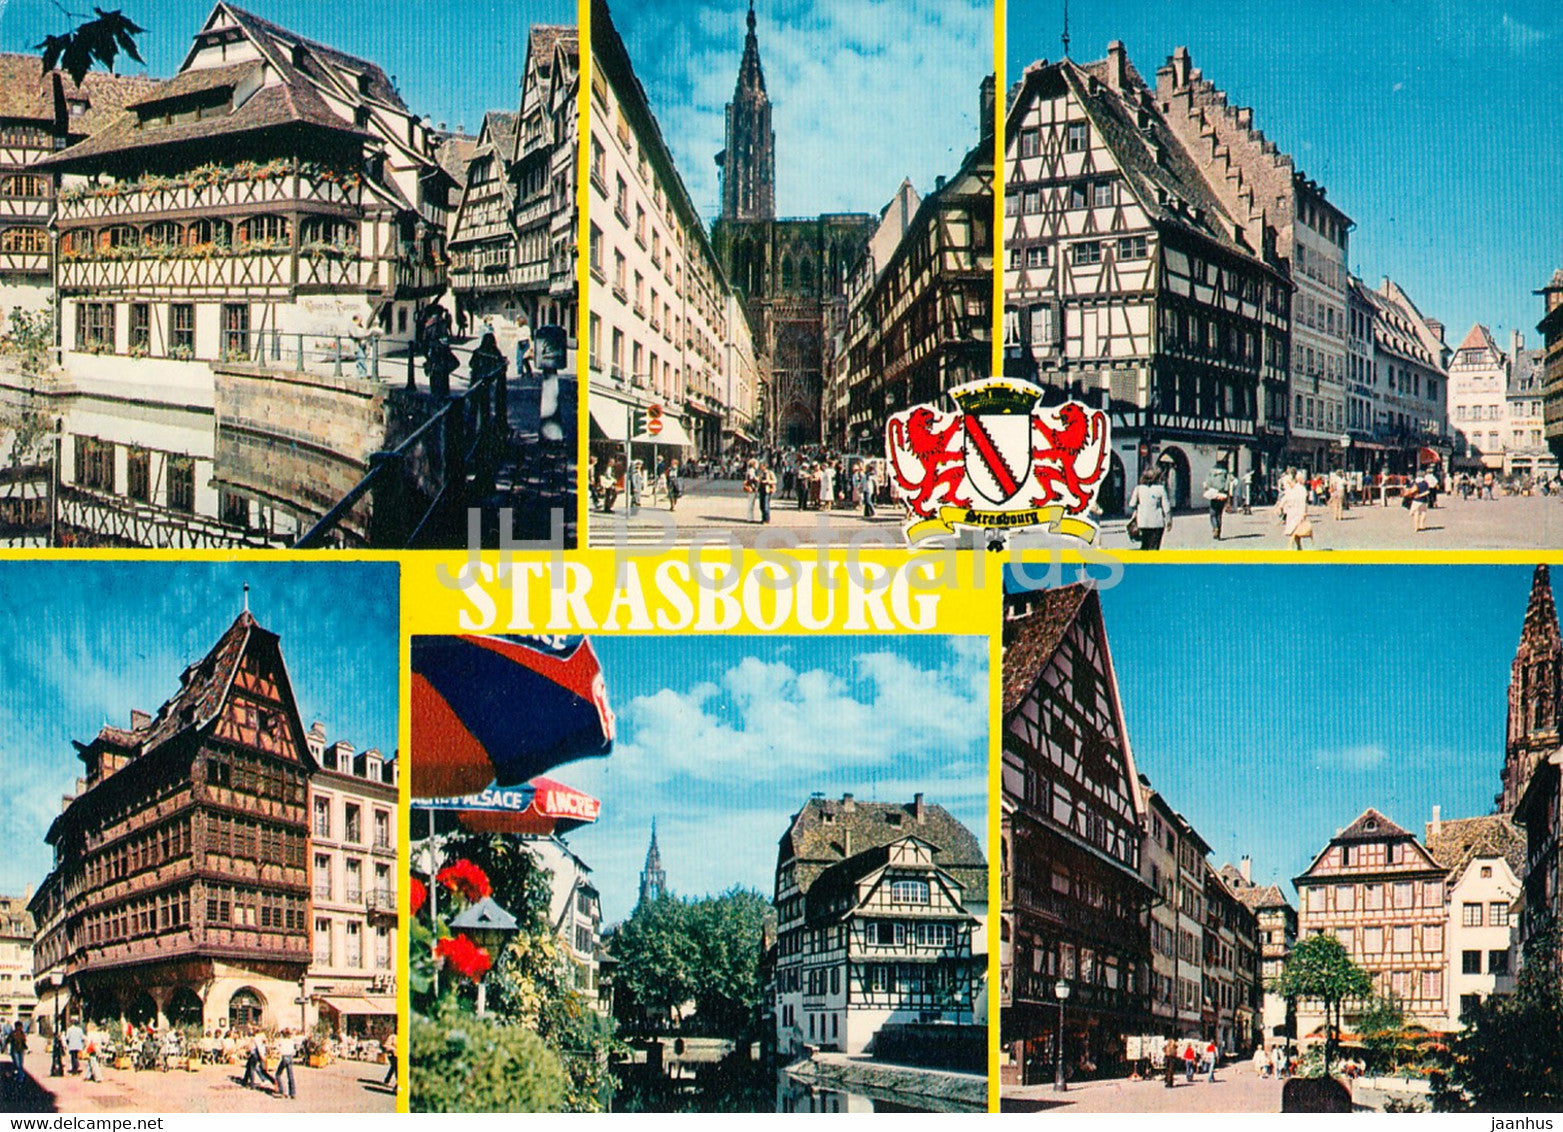 Strasbourg - La Rue du Bain aux Plantes - La Cathedrale - Kammerzell - multiview - France - used - JH Postcards